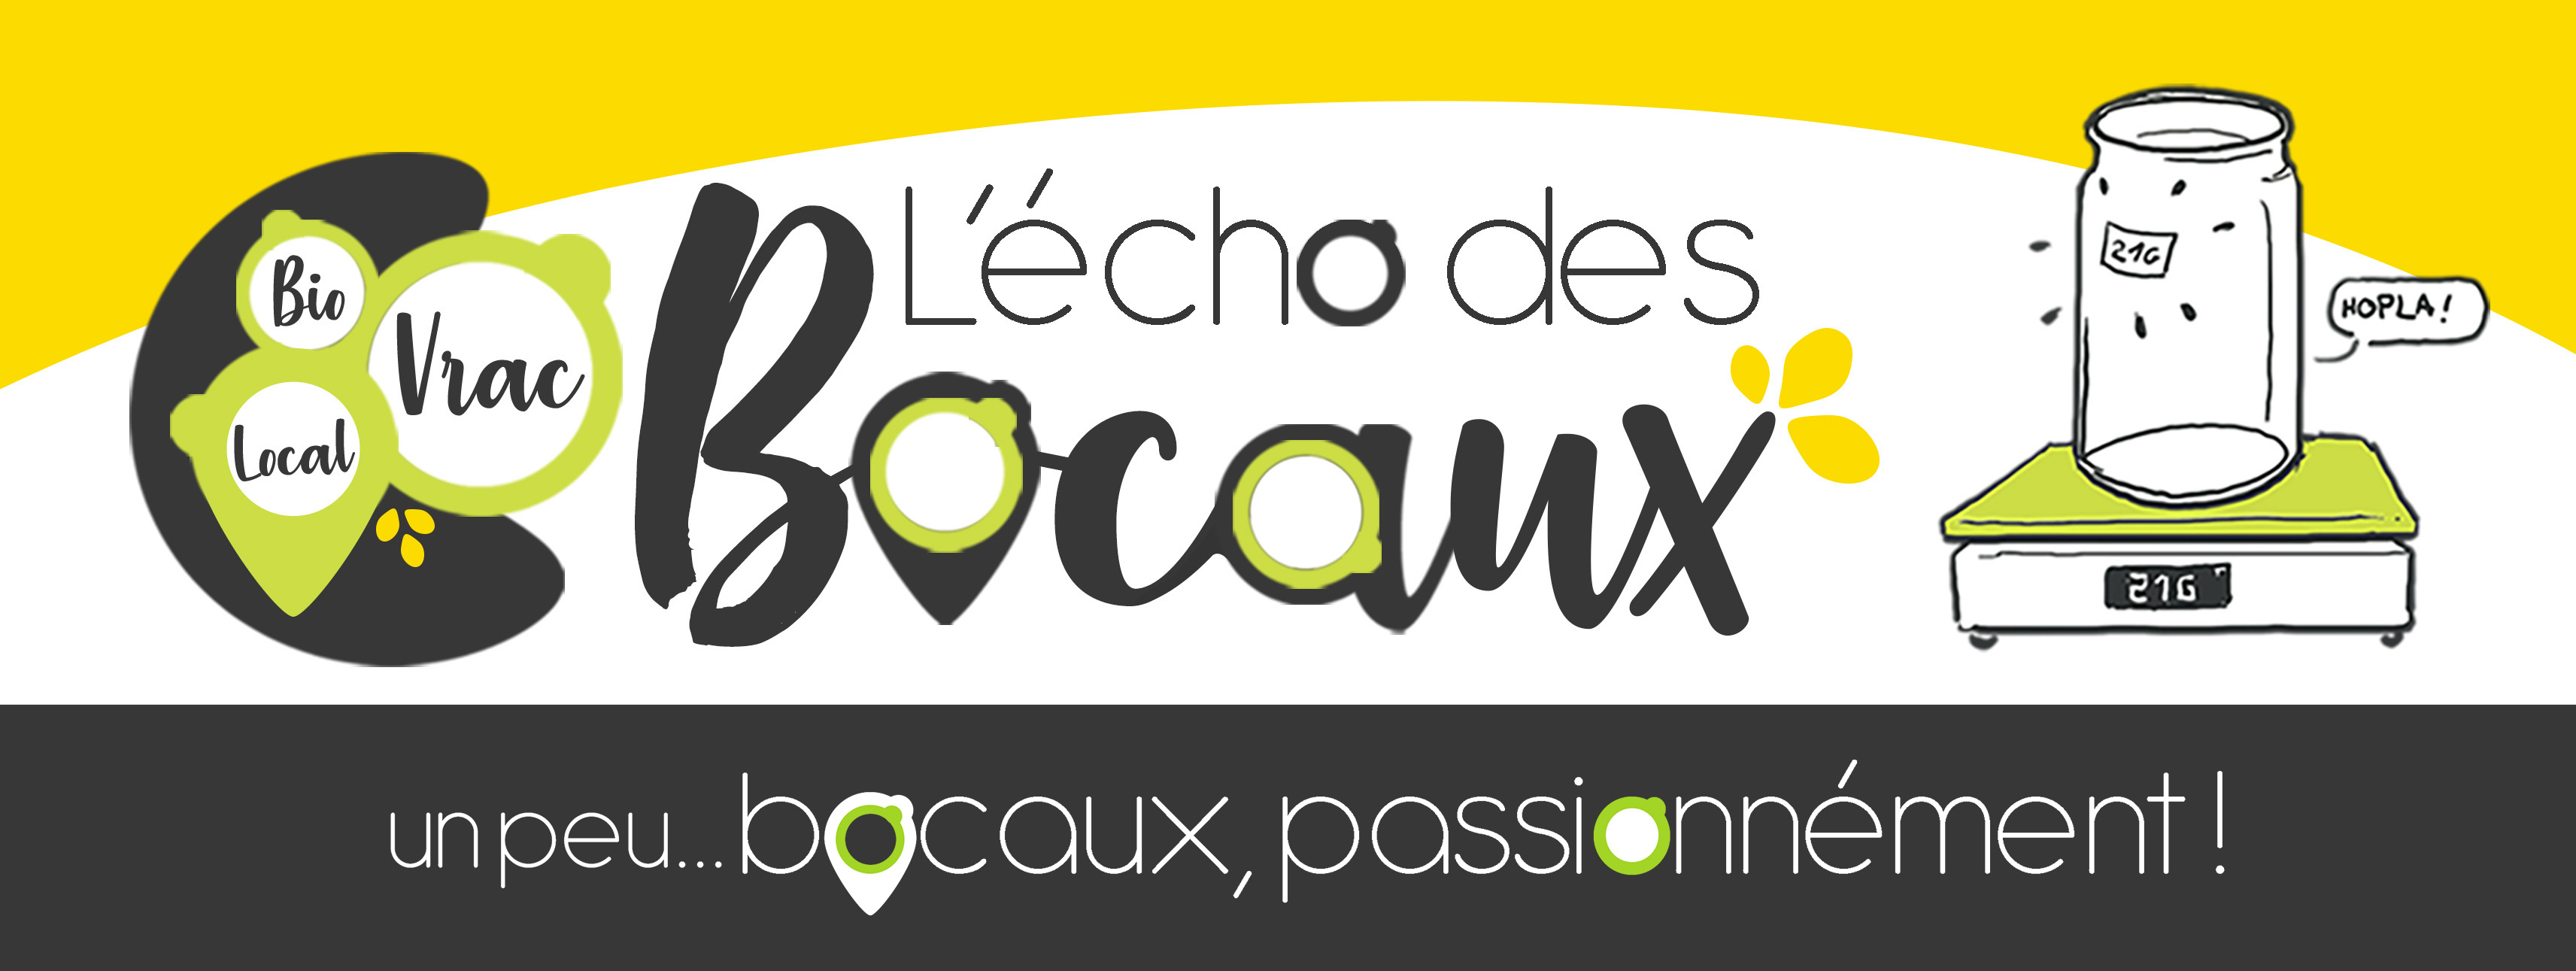 logo de L'ECHO DES BOCAUX